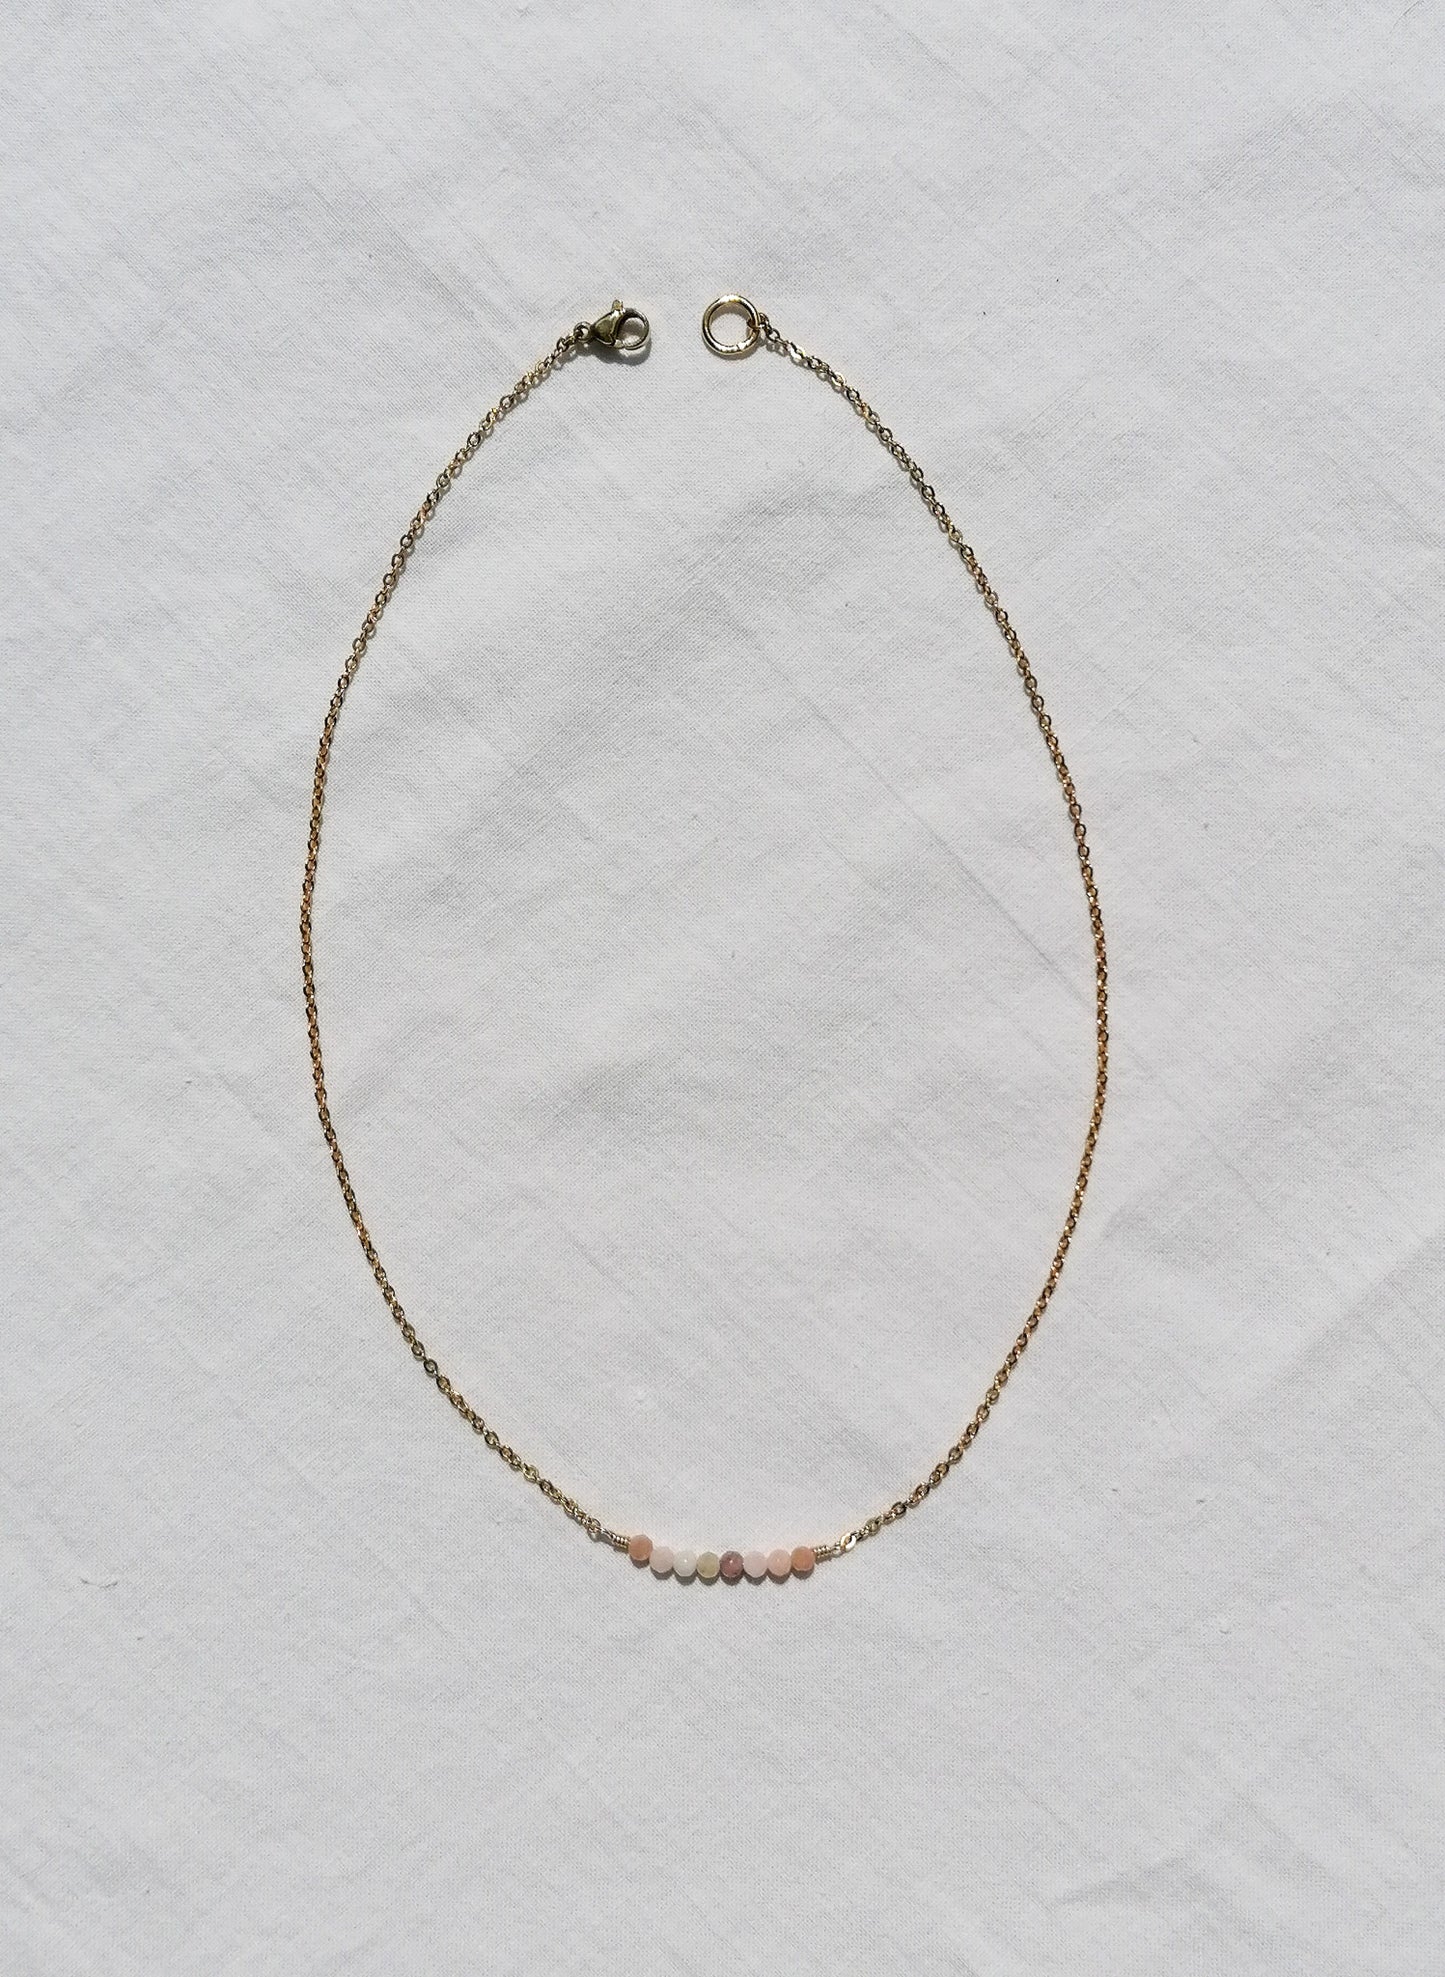 Pink opal bar jewelry set